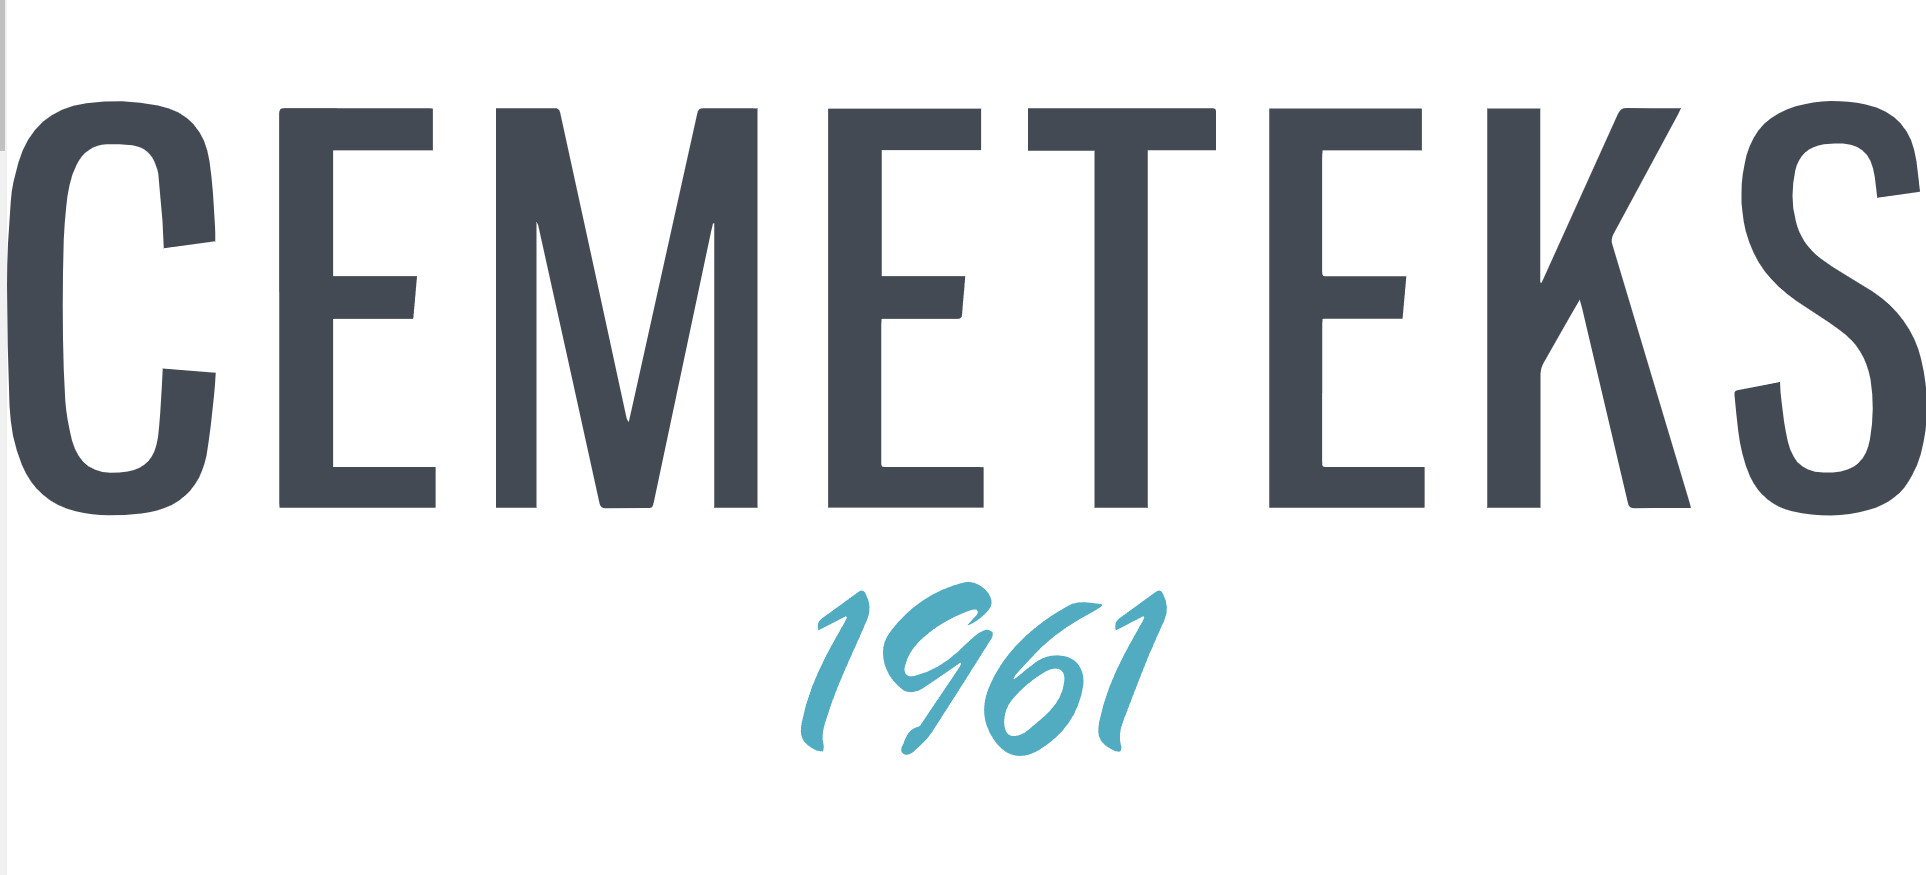 Cemeteks Logo